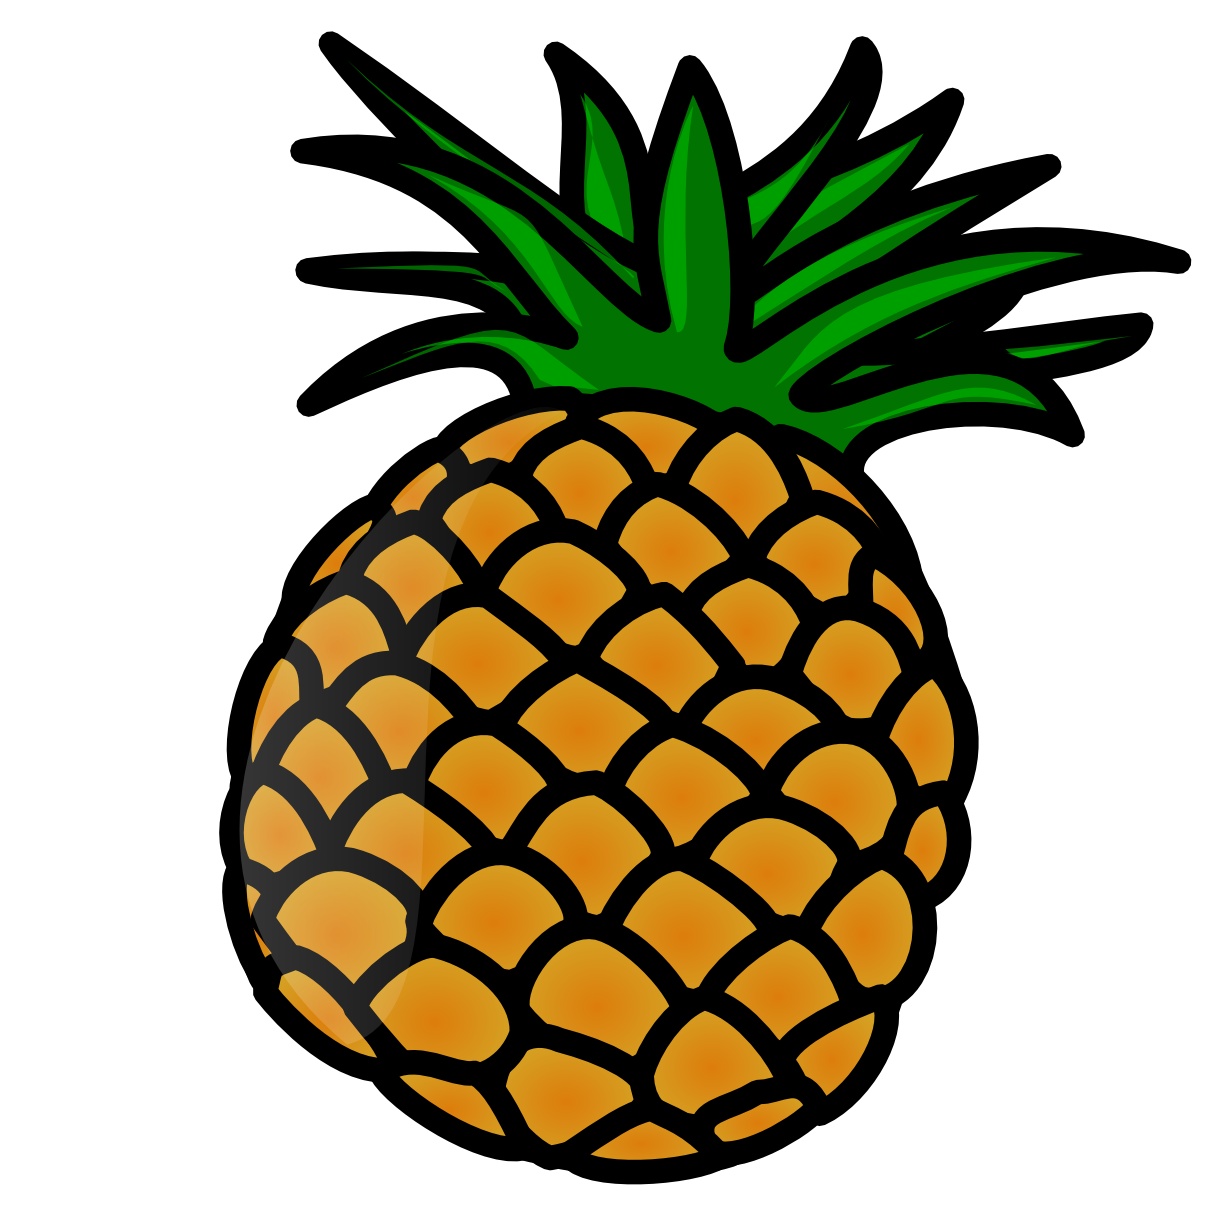 Download Cartoon Pineapple Clip Art HQ PNG Image | FreePNGImg